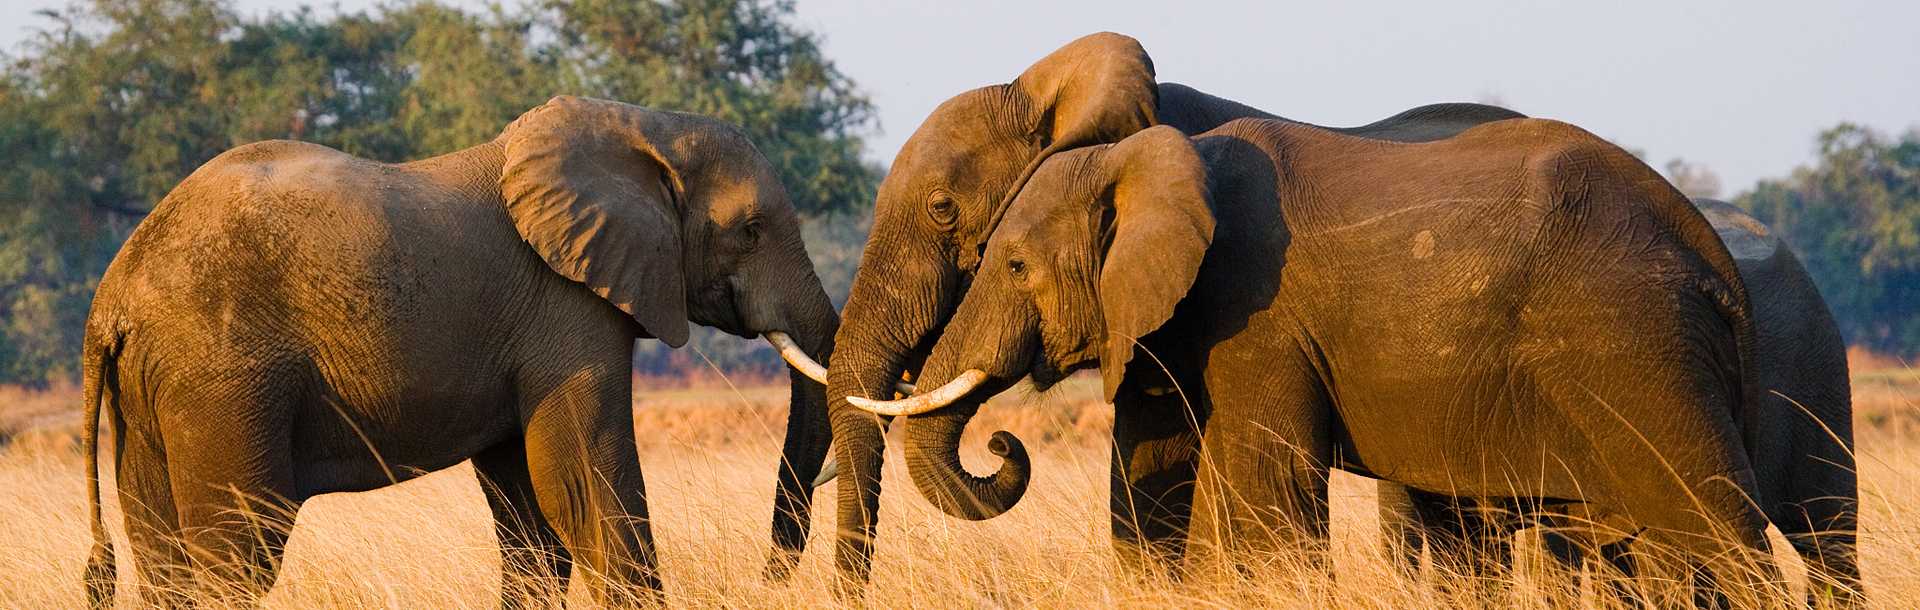 Zambia Safaris - Elephants in Lower Zambezi National Park